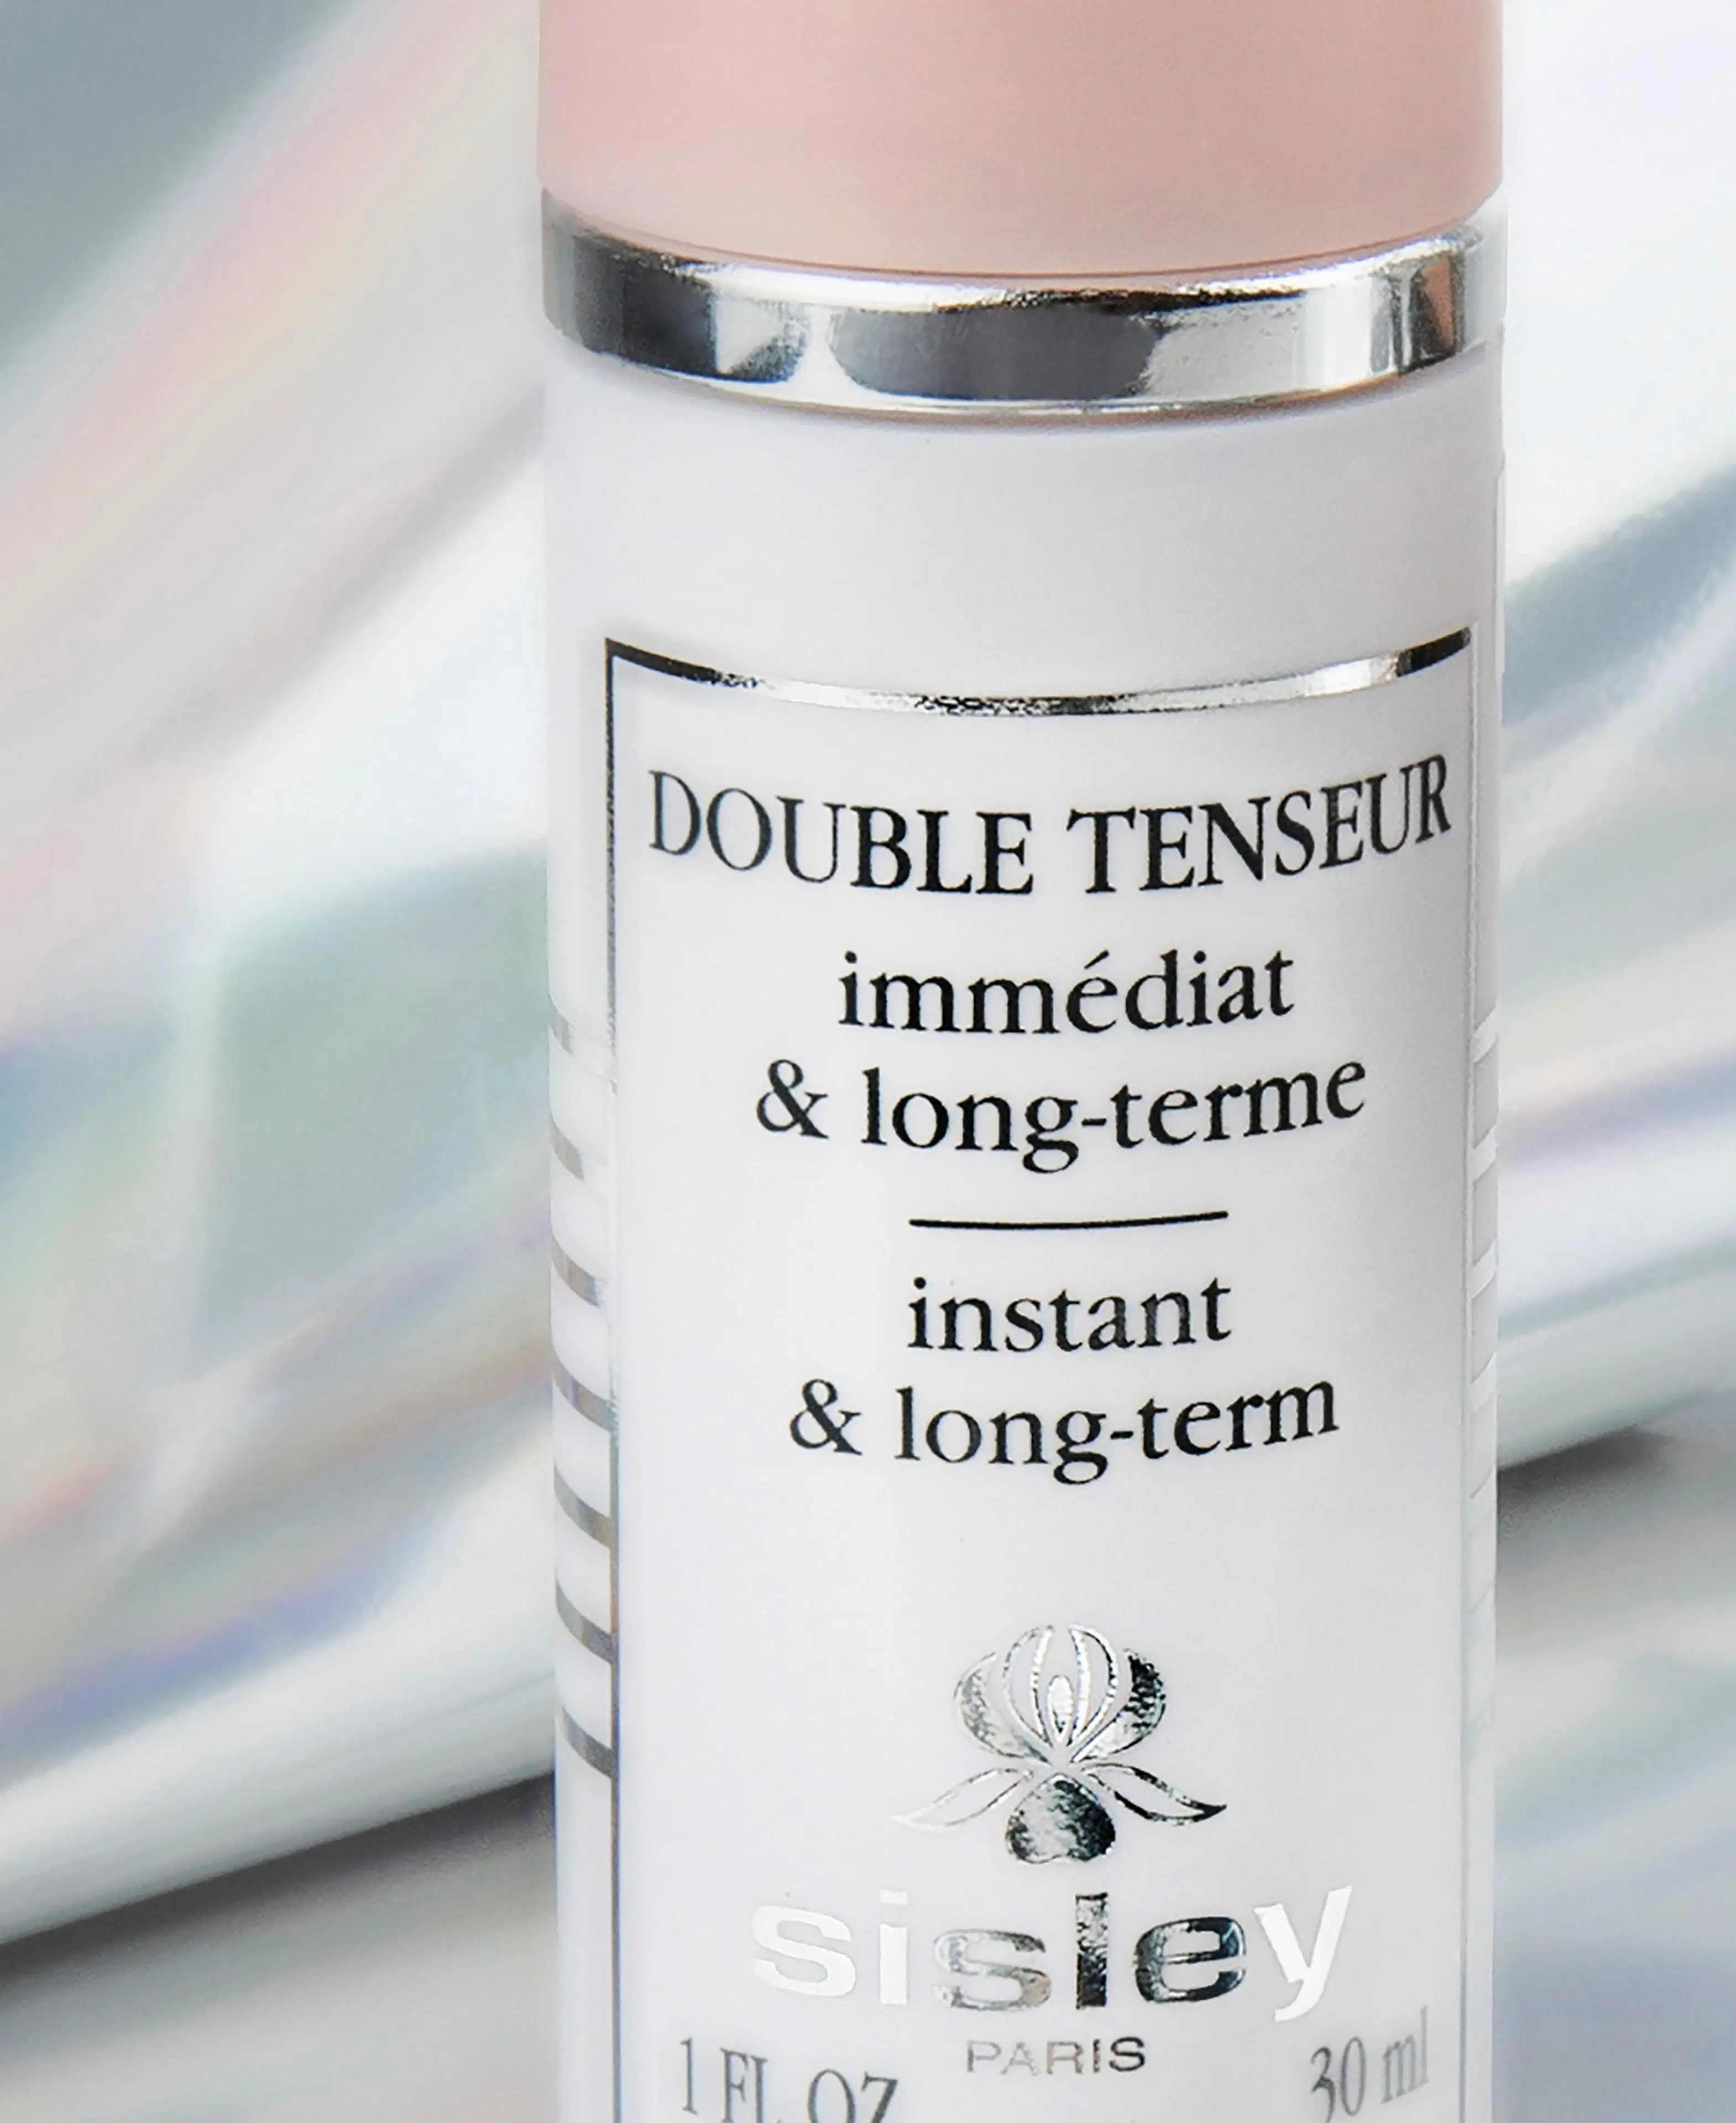 Sisley Double Tenseur instant & long-term kasvogeeli 30 ml